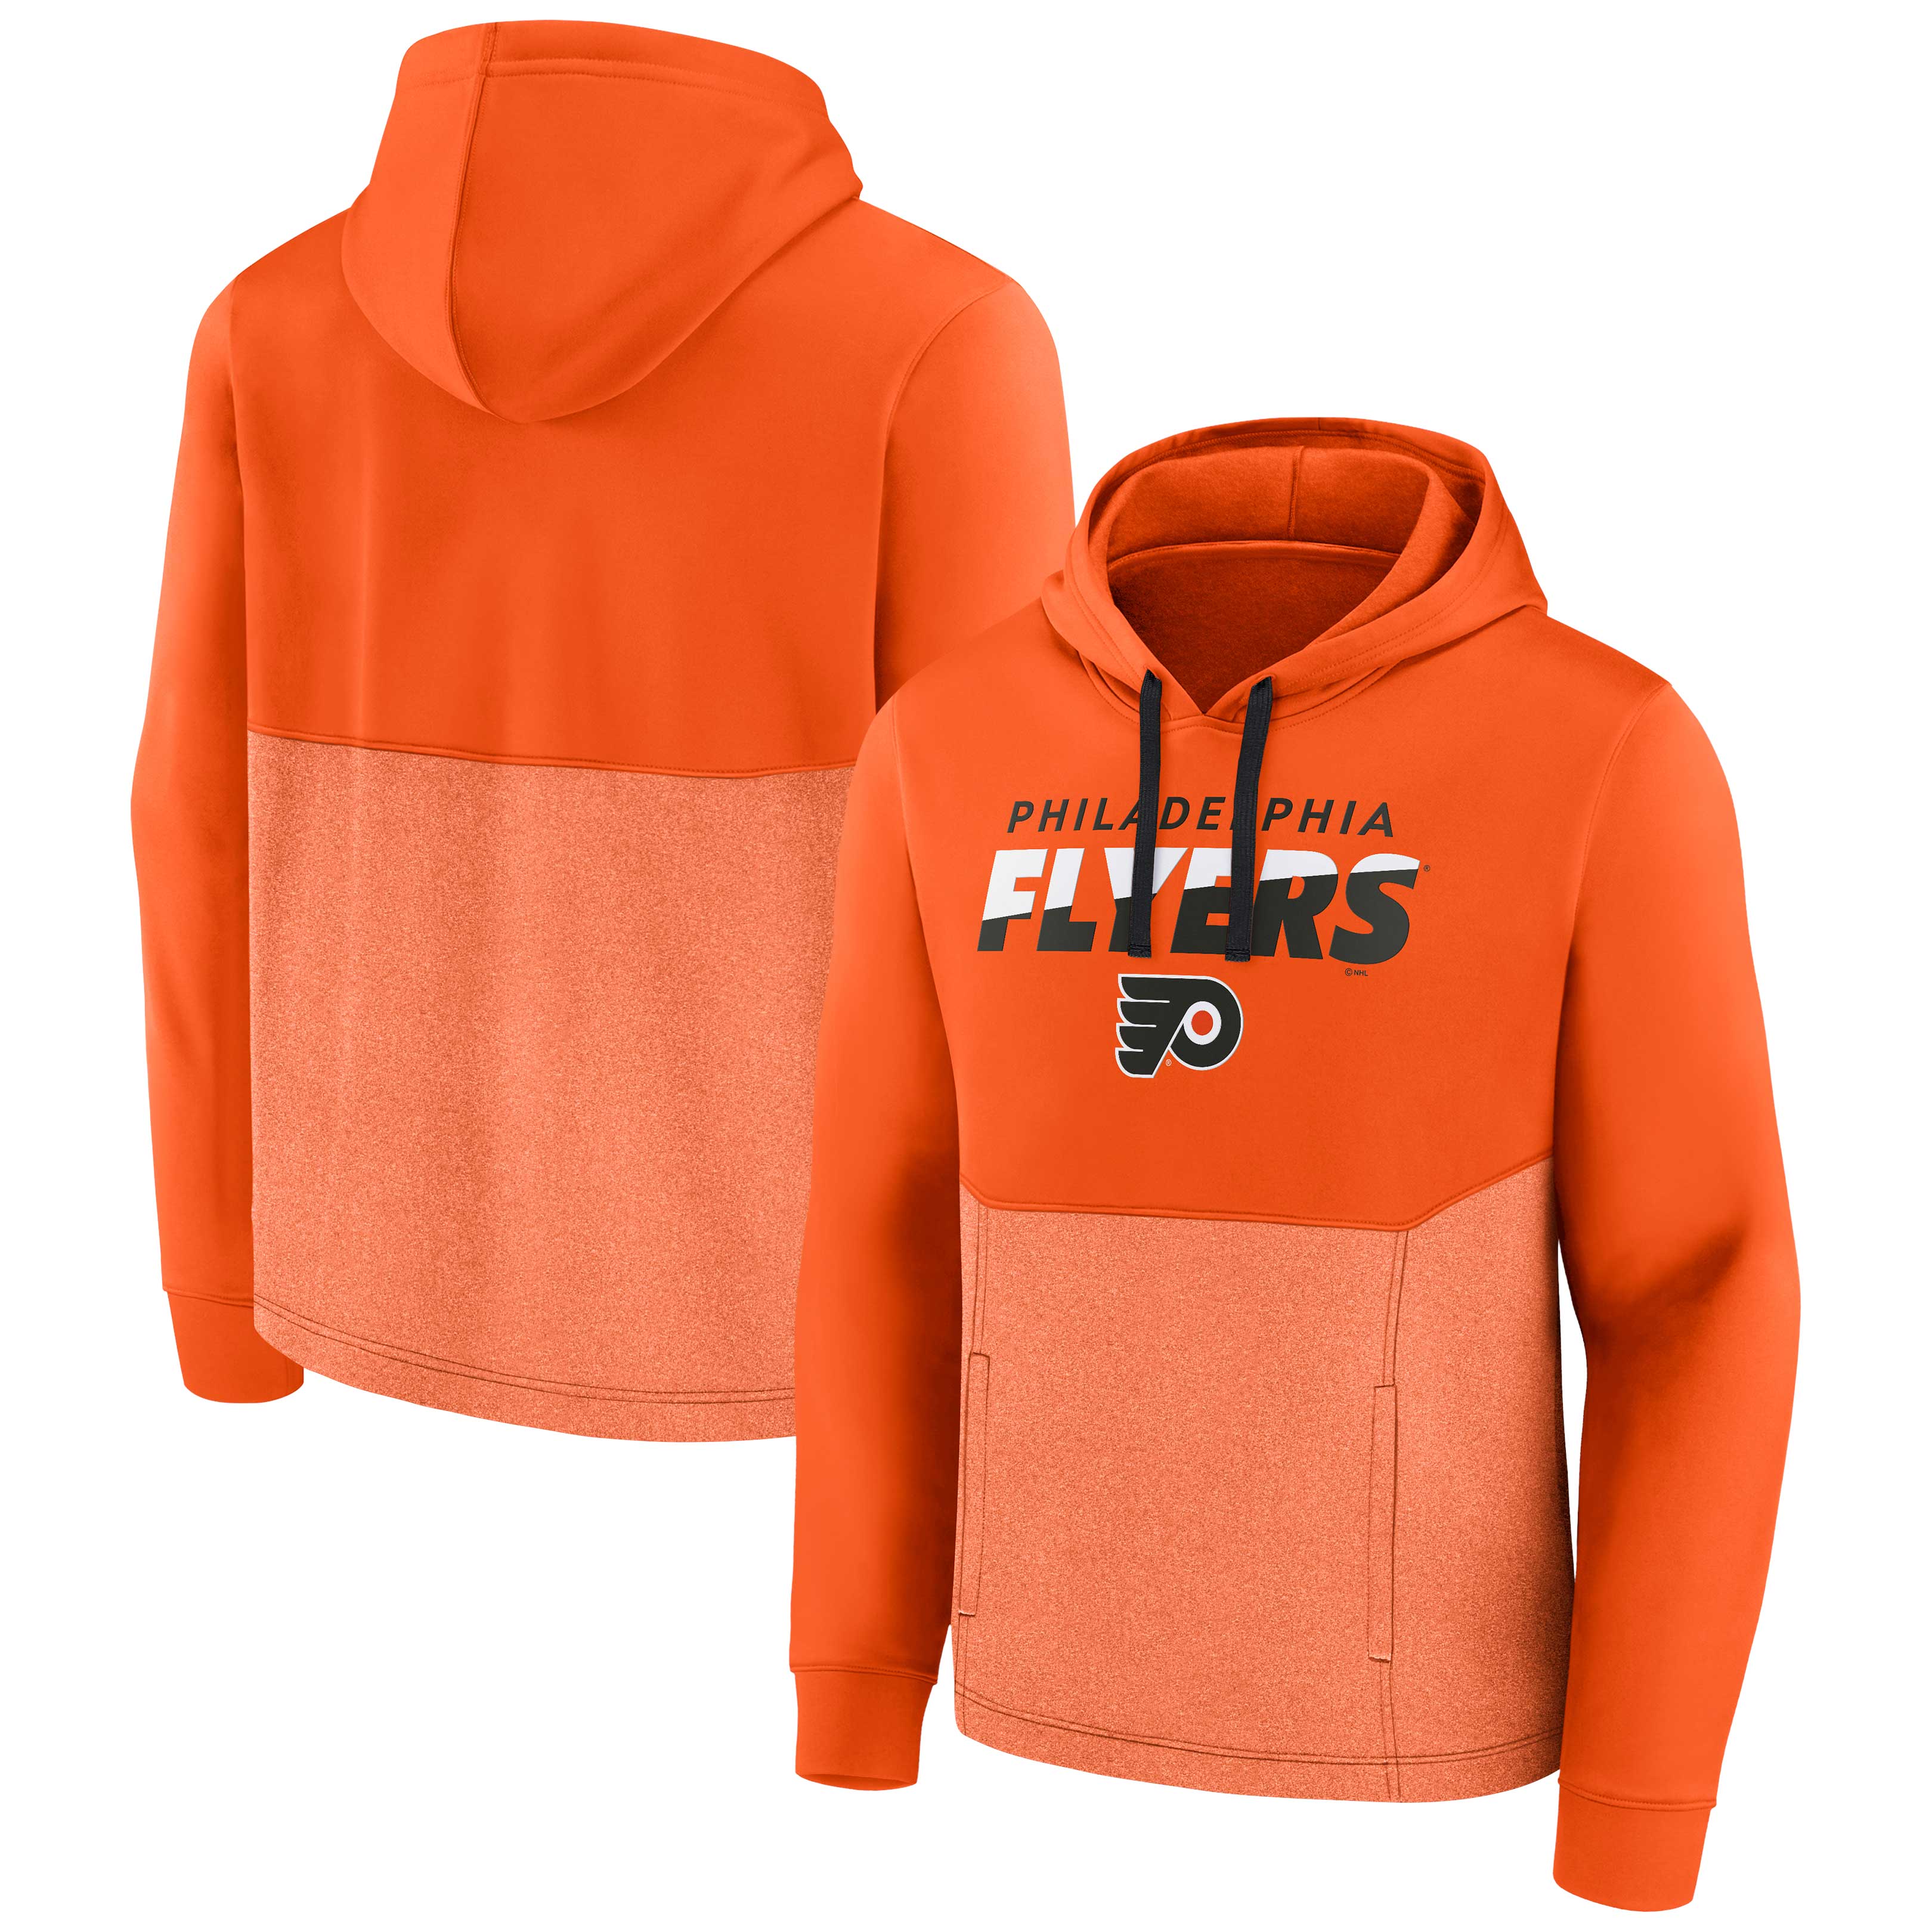 Men's Fanatics Branded Orange Philadelphia Flyers Slash Attack Pullover Hoodie - image 1 of 3